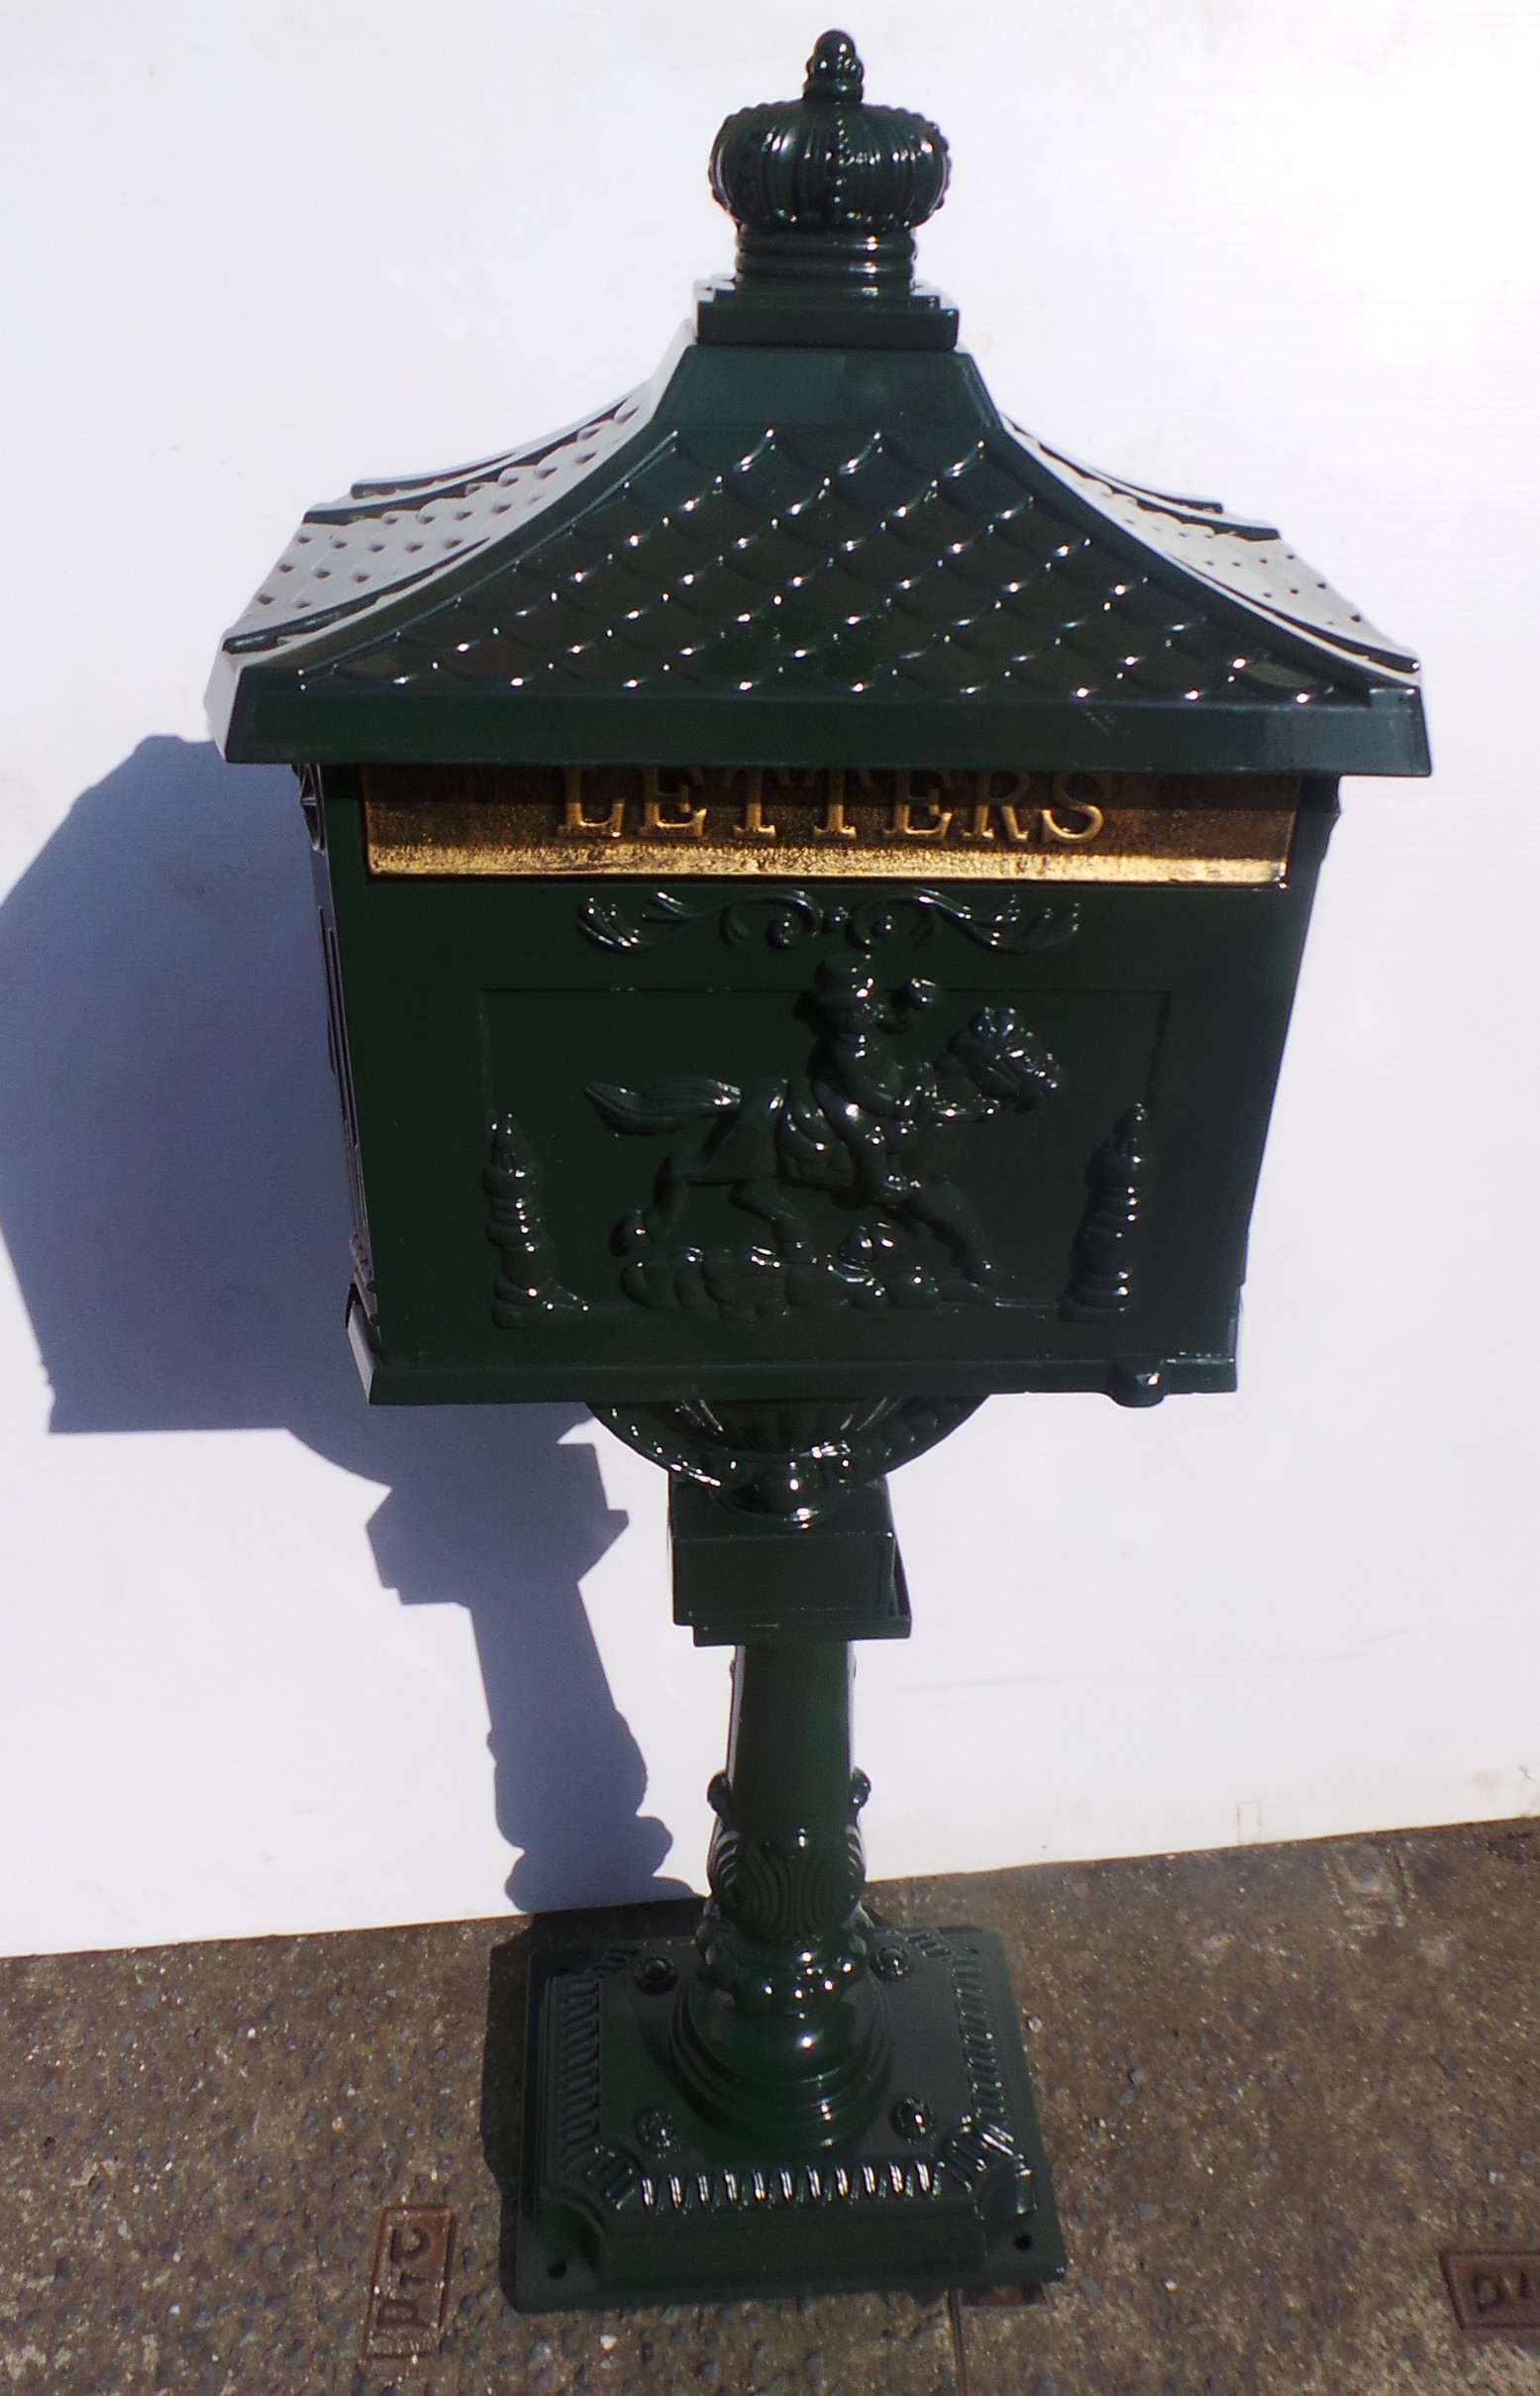 Pillar post box